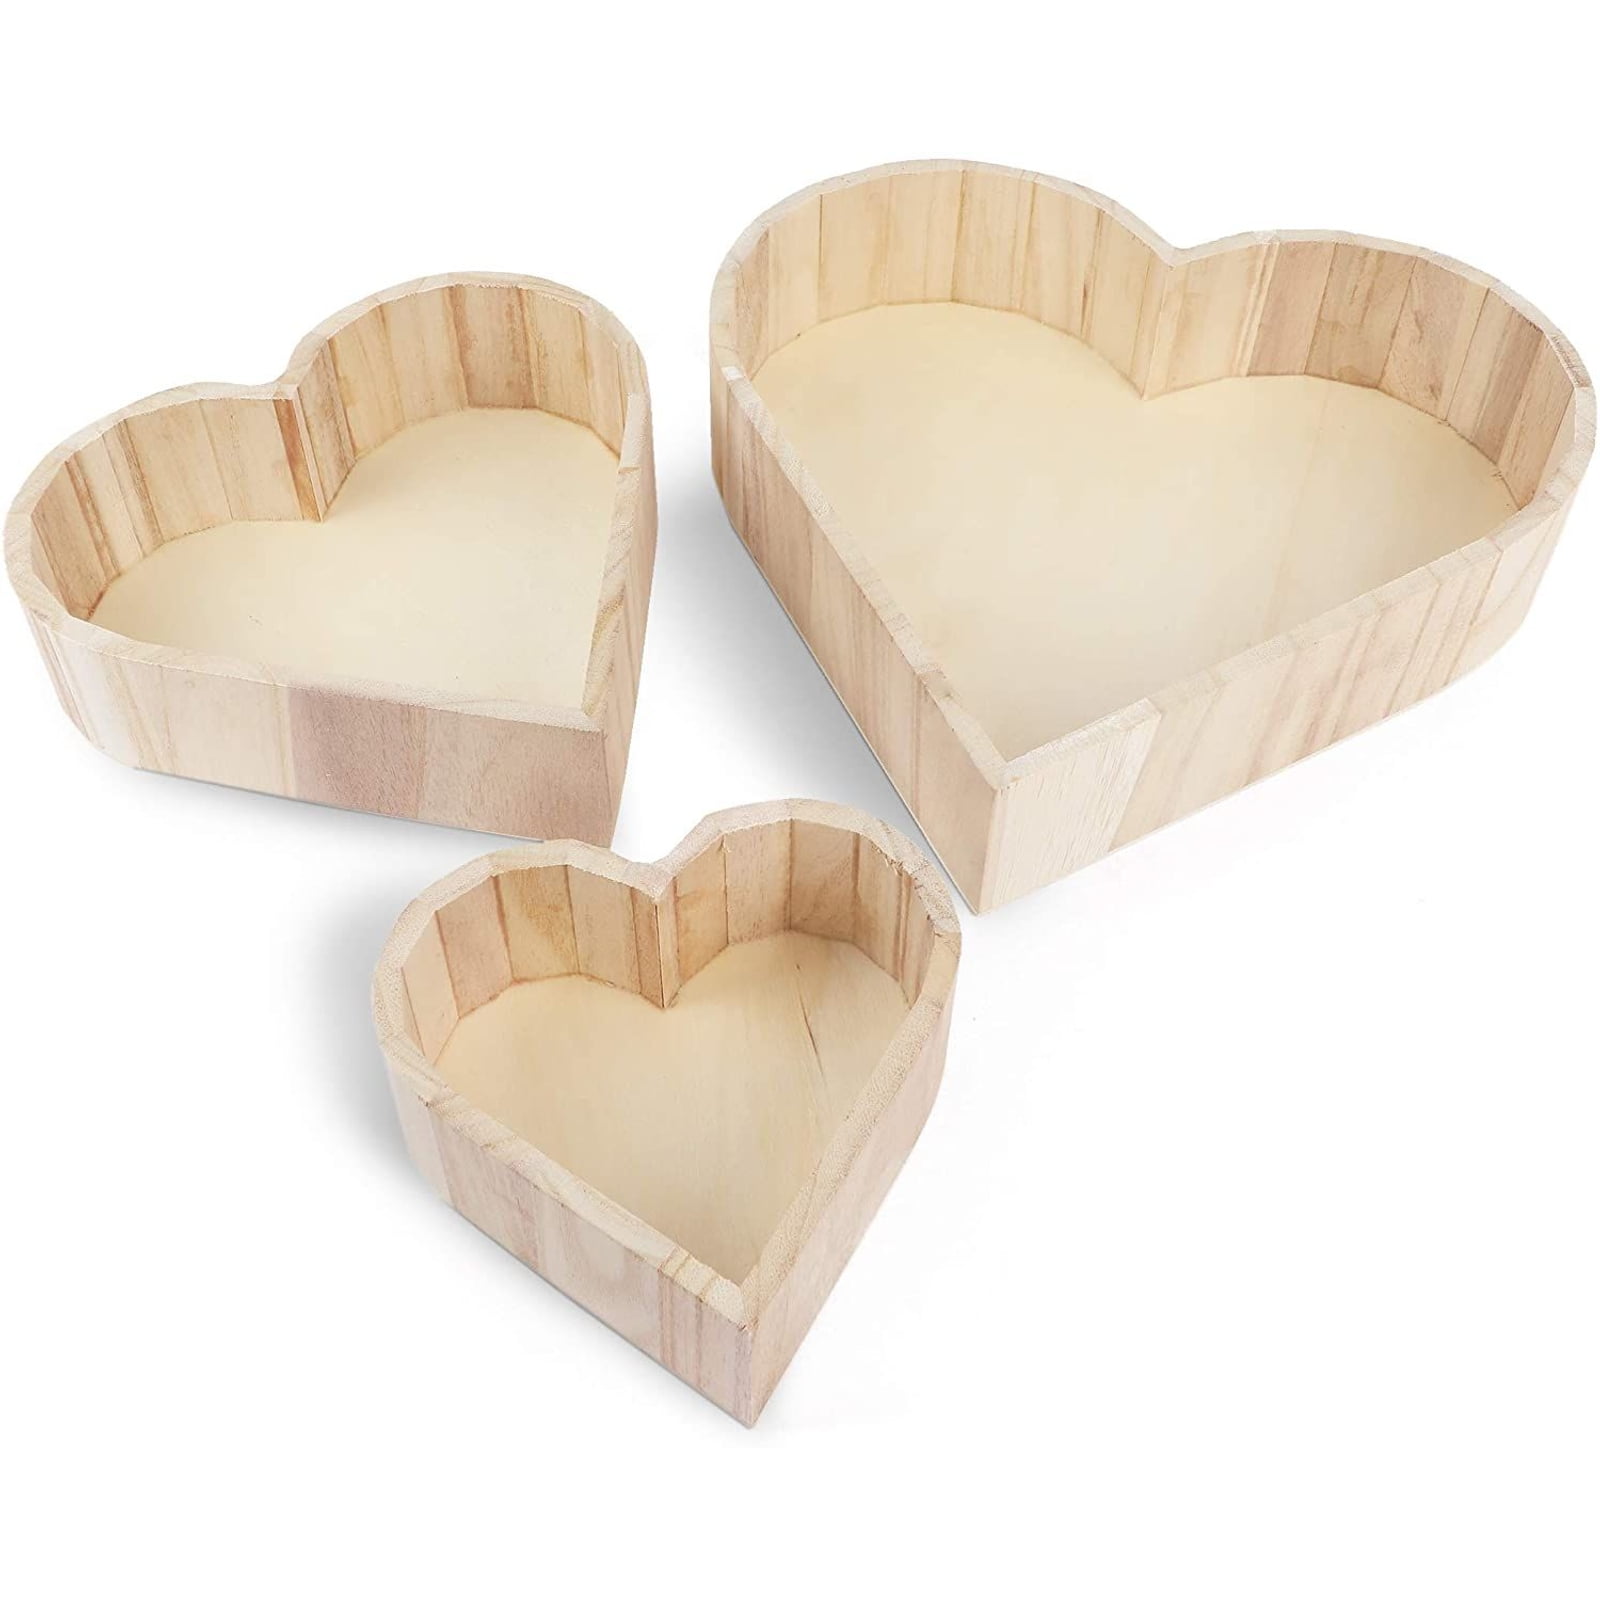 Wooden Box Heart Design Home Storage Decoration Wedding  Gift Wood Crates 